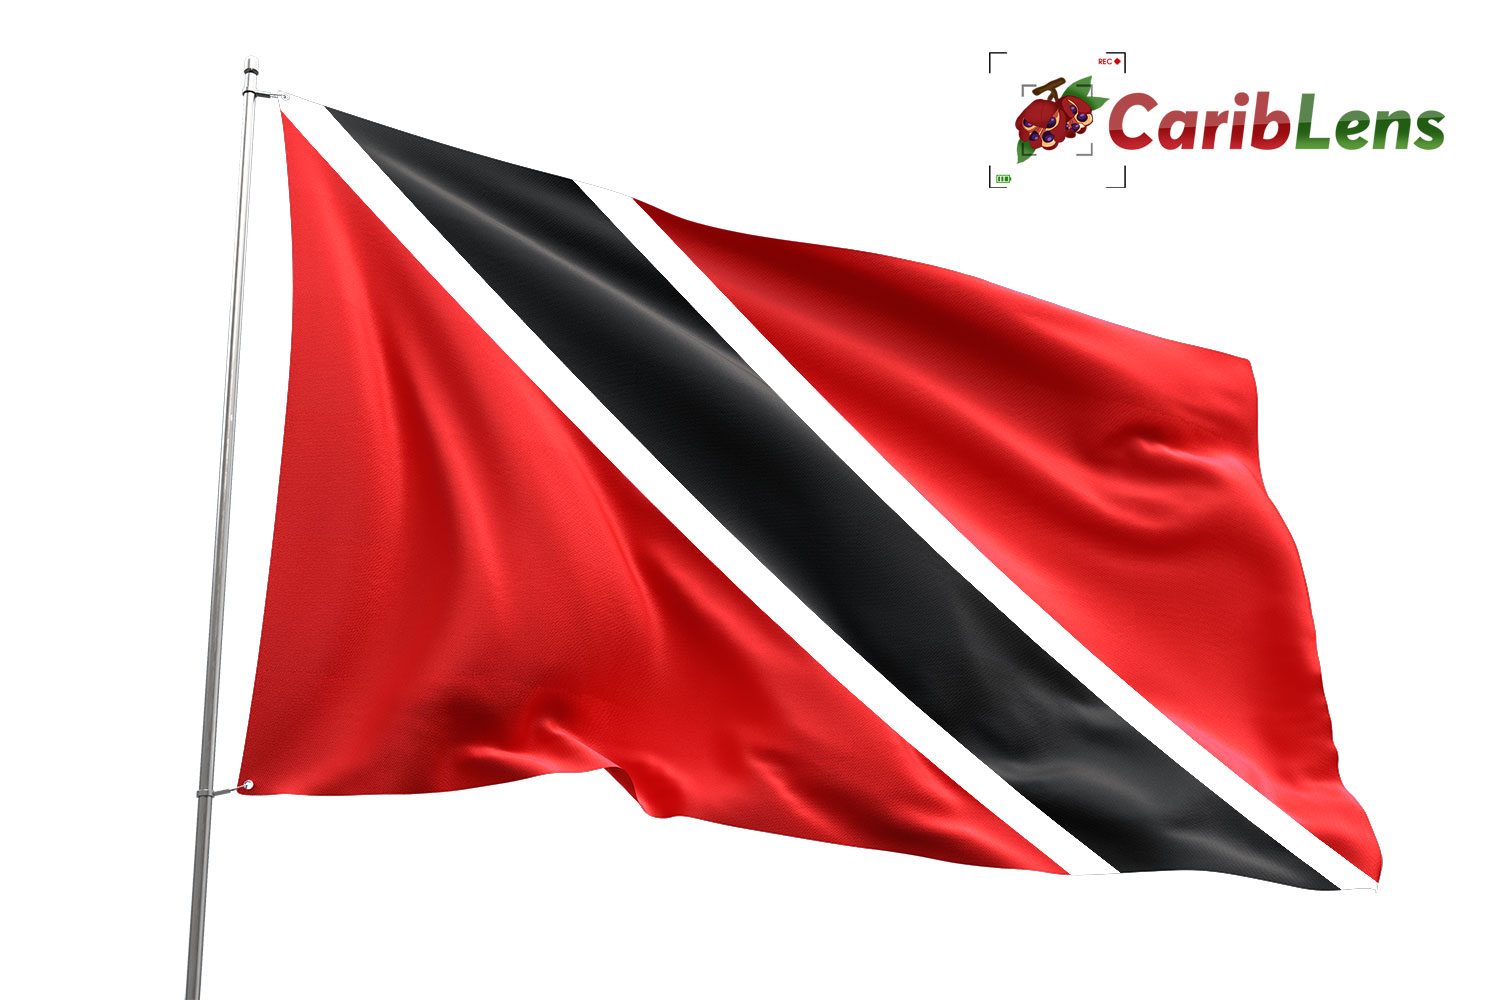 The National Trinidad And Tobago Flag Hanging Horizontally